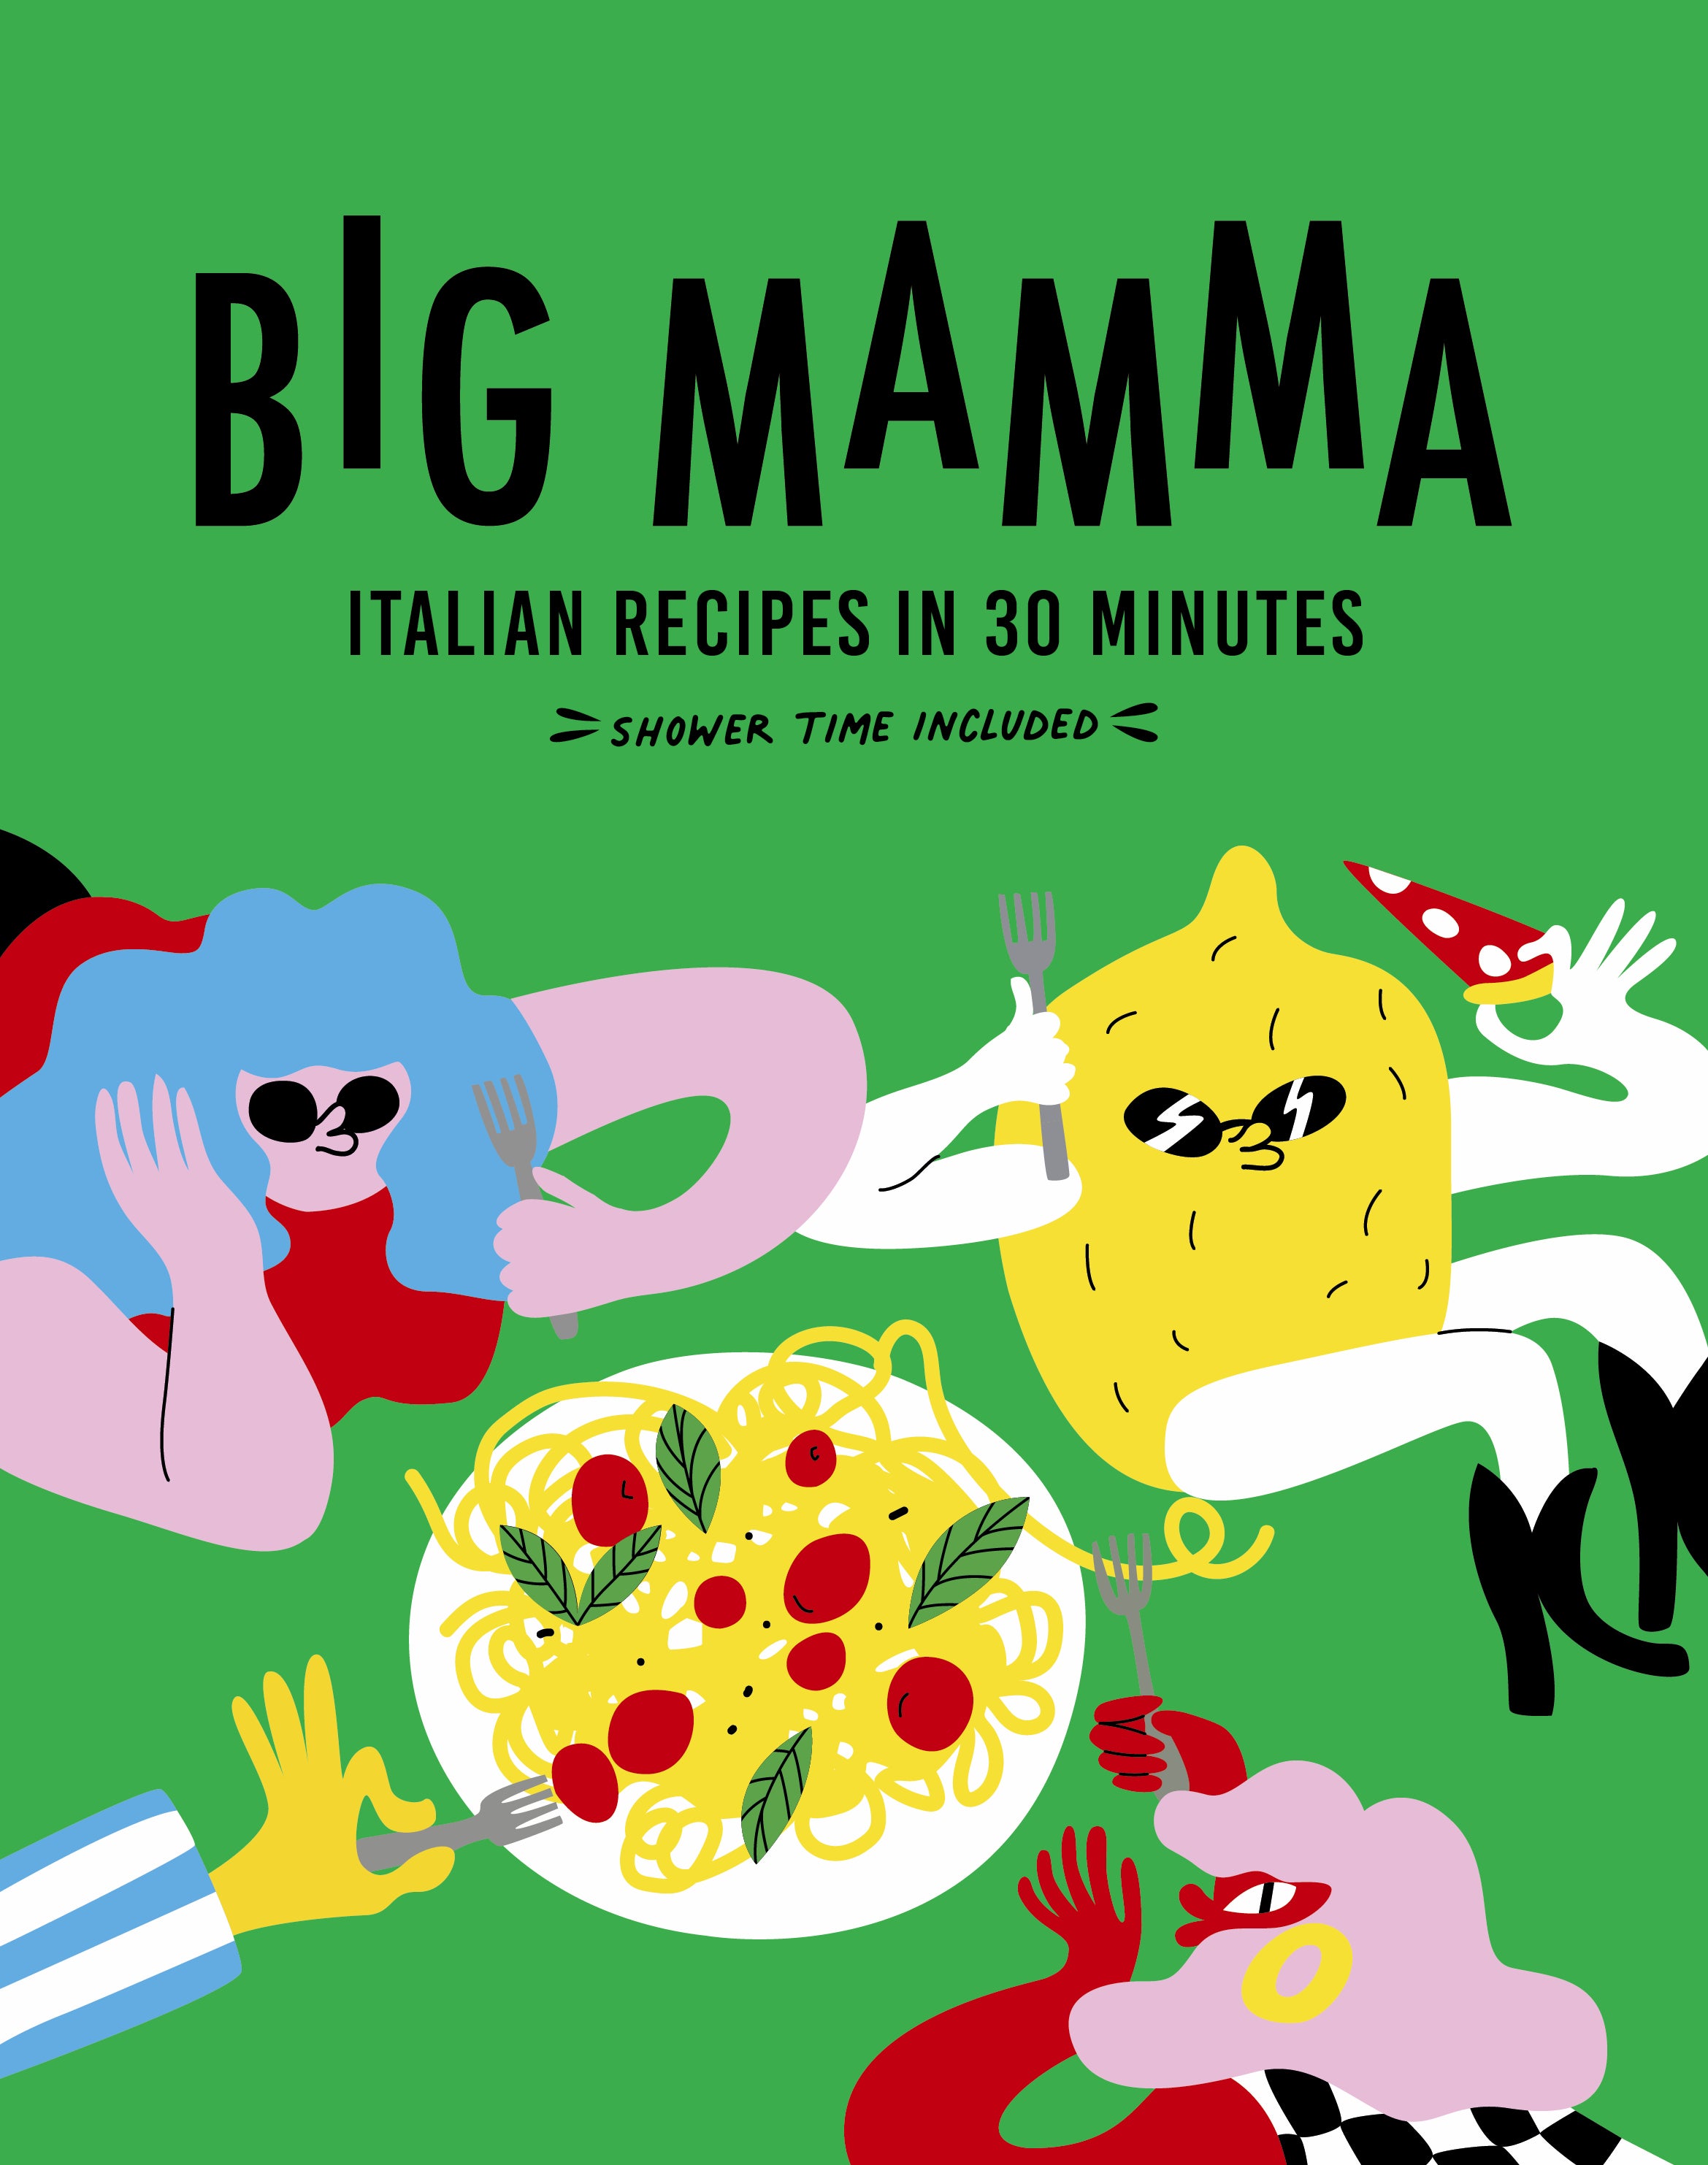 Big Mamma’s first 30-minute recipe book contains over 100 recipes